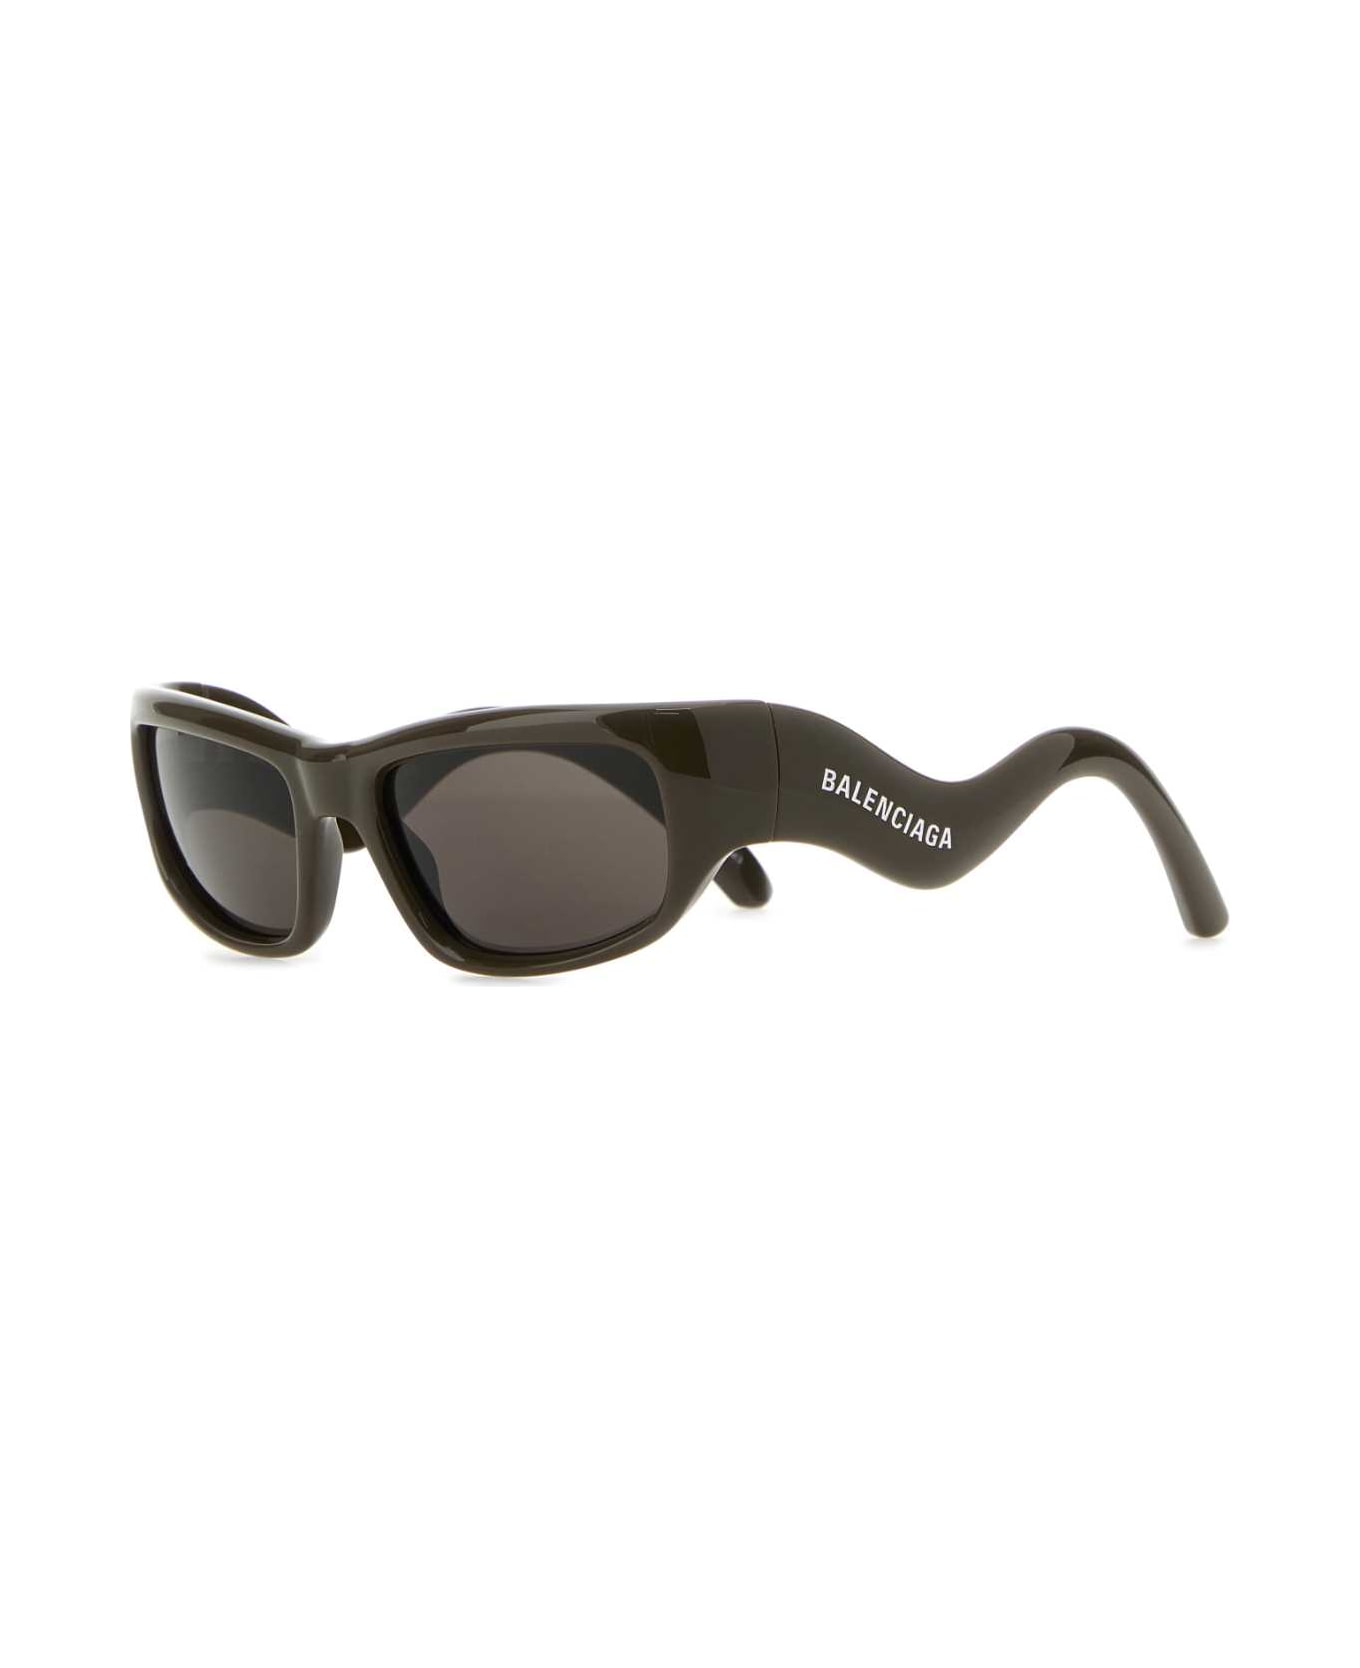 Balenciaga Brown Acetate Hamptons Rectangle Sunglasses - COLDBROWN